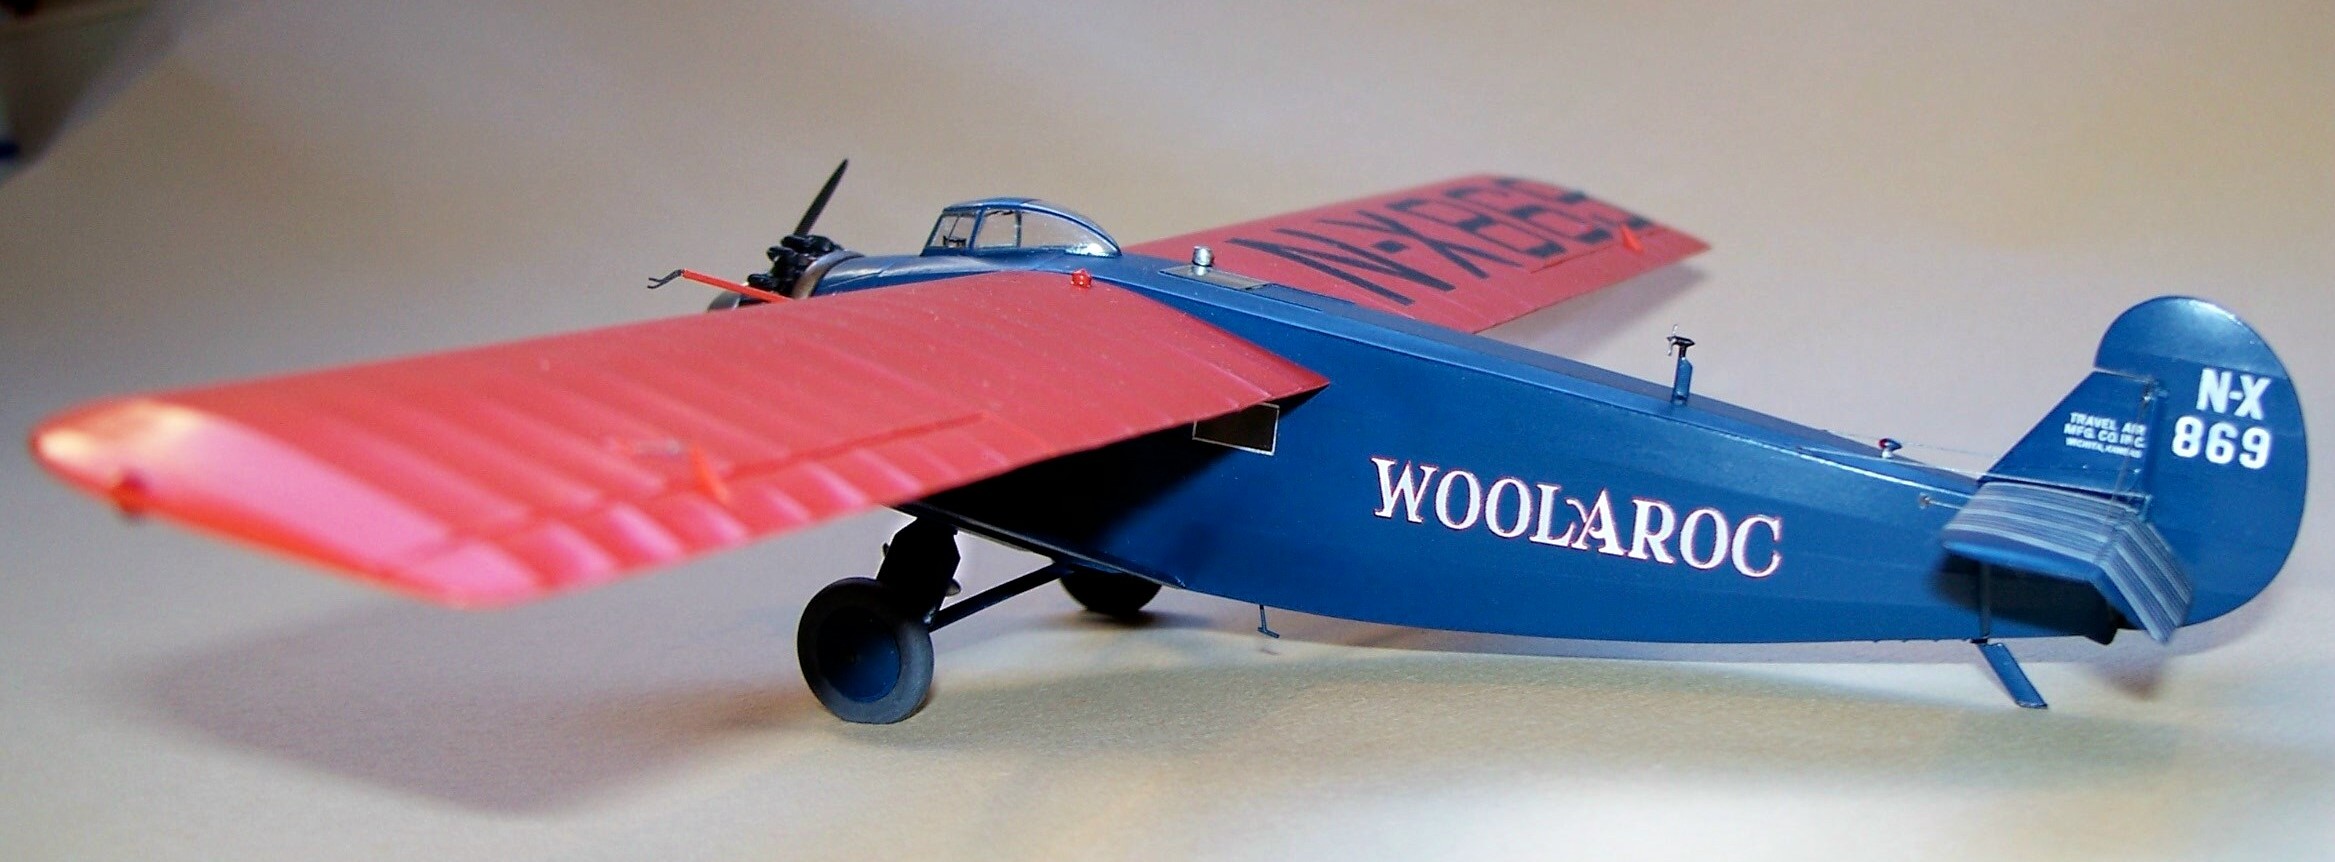 Travel Air 5000 Woolaroc model_7 (2).jpg  by Rogerhold